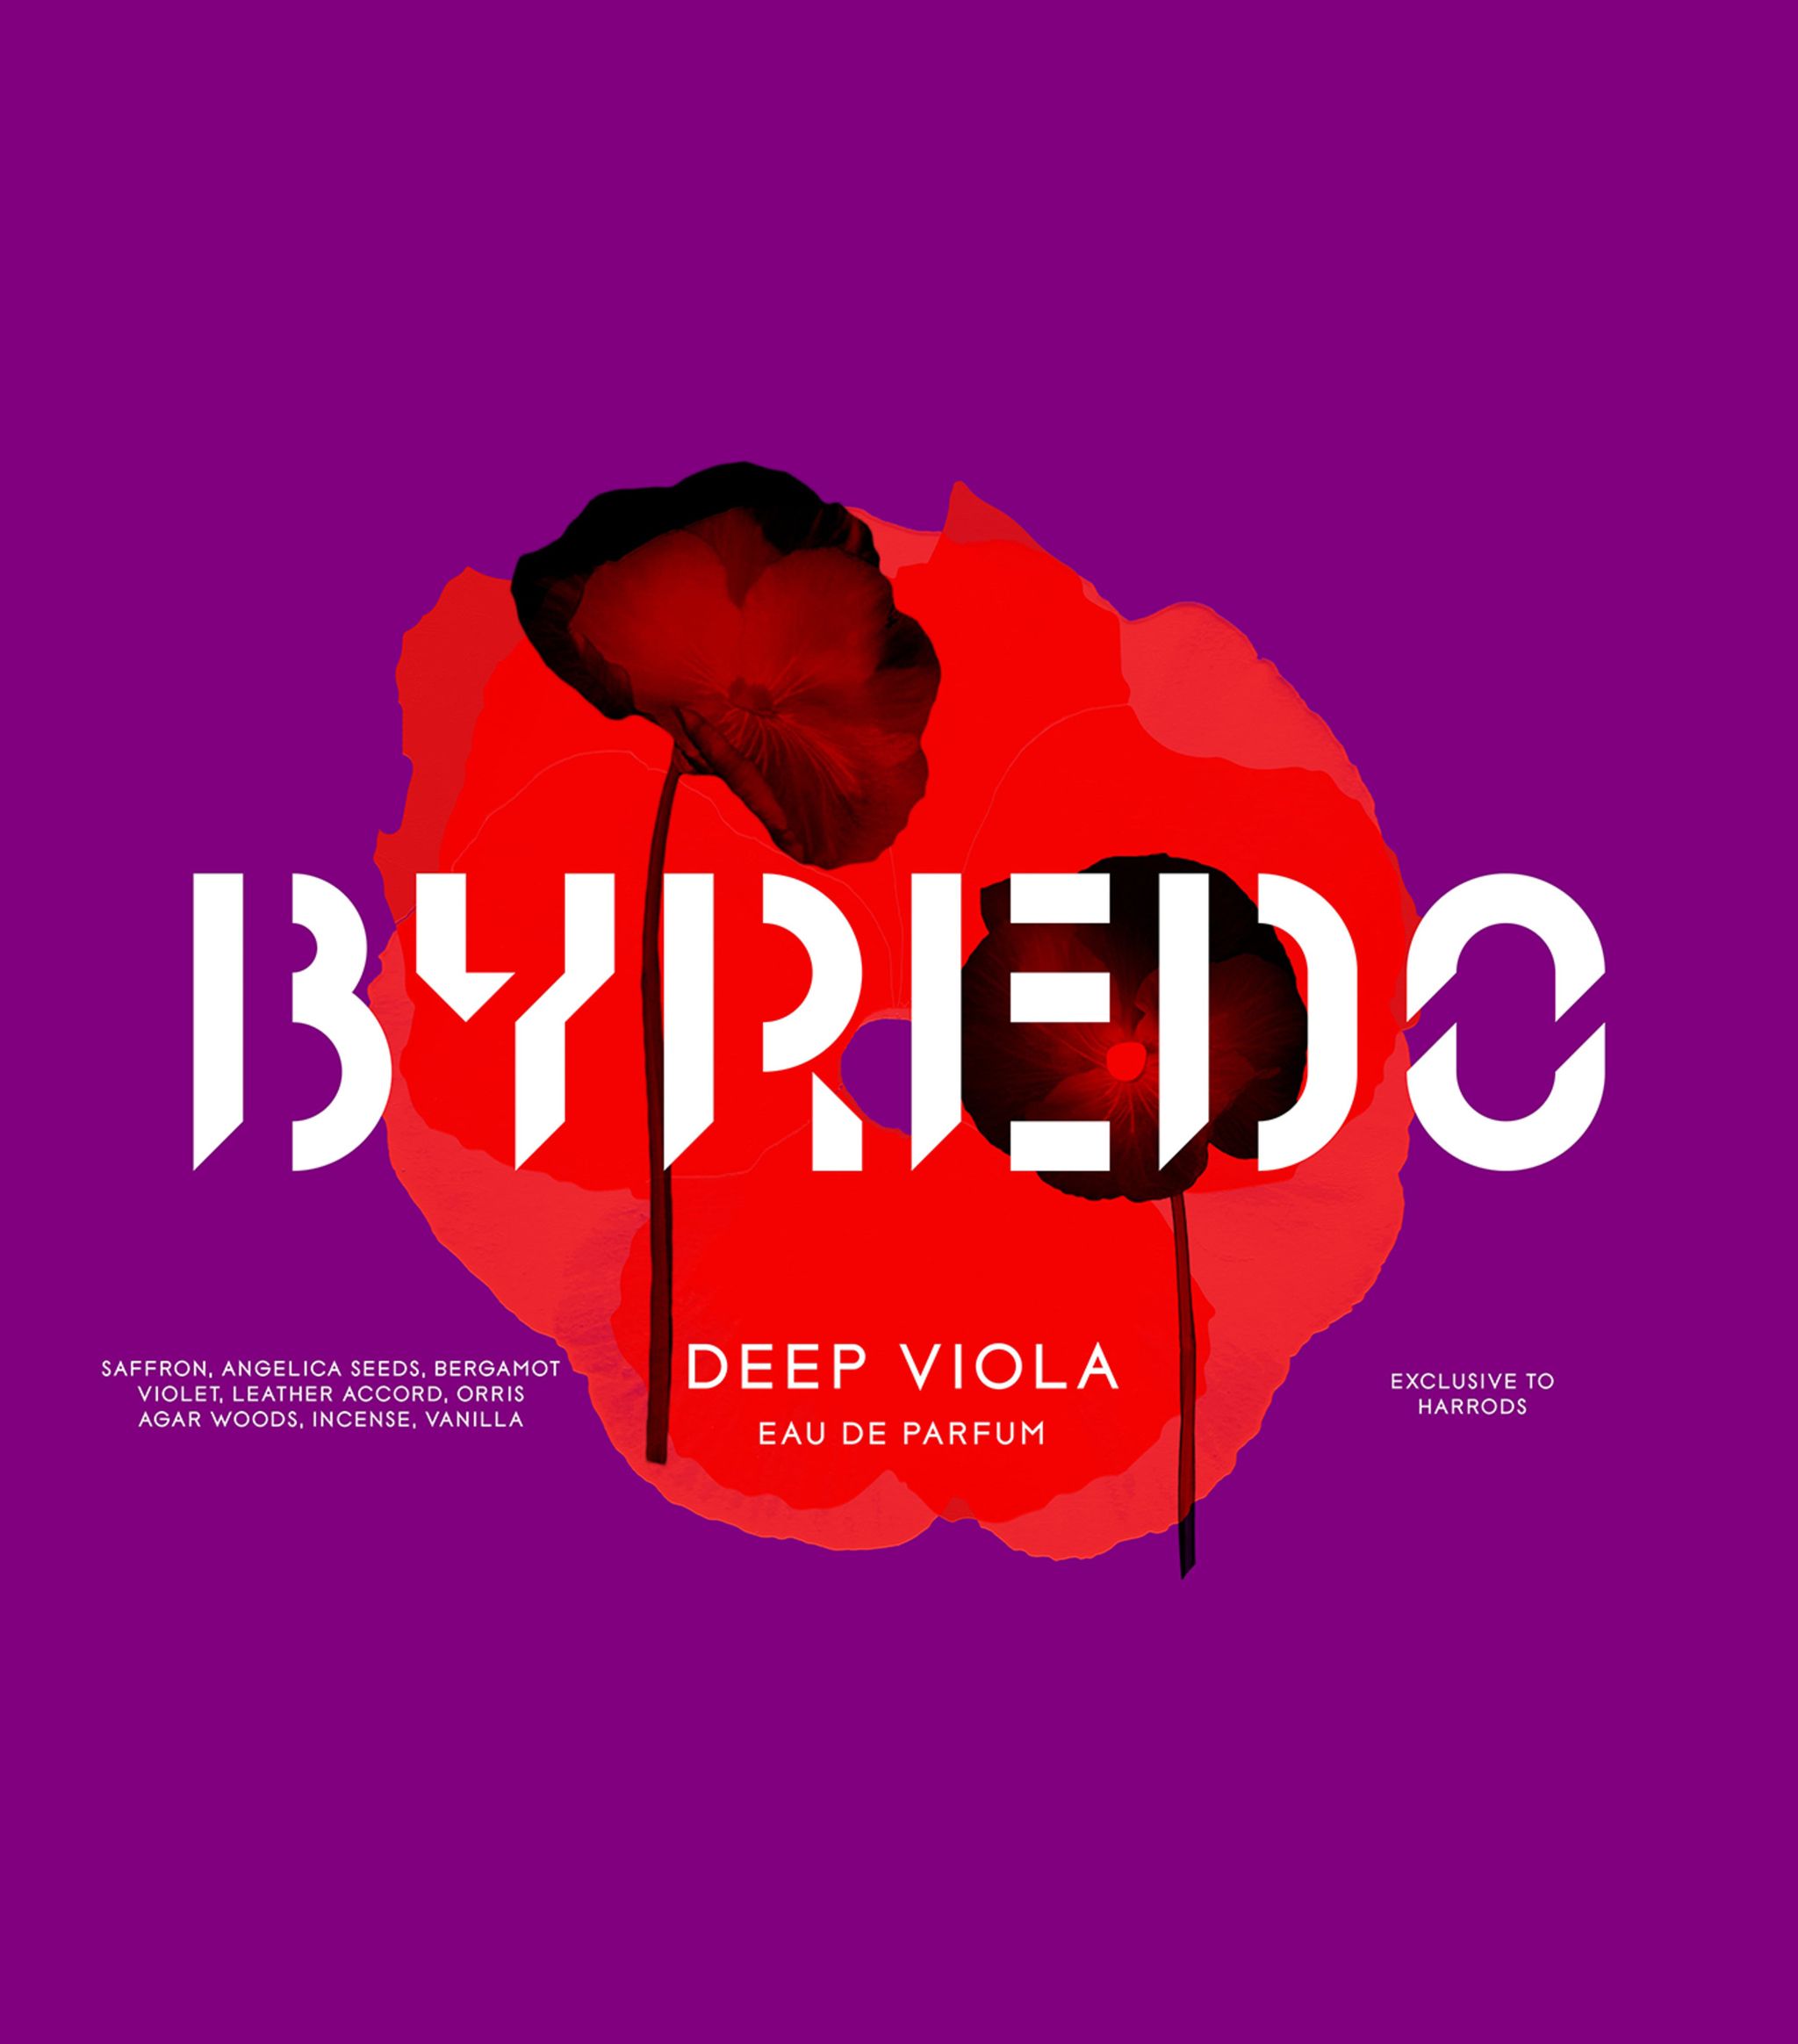 Byredo Deep Viola